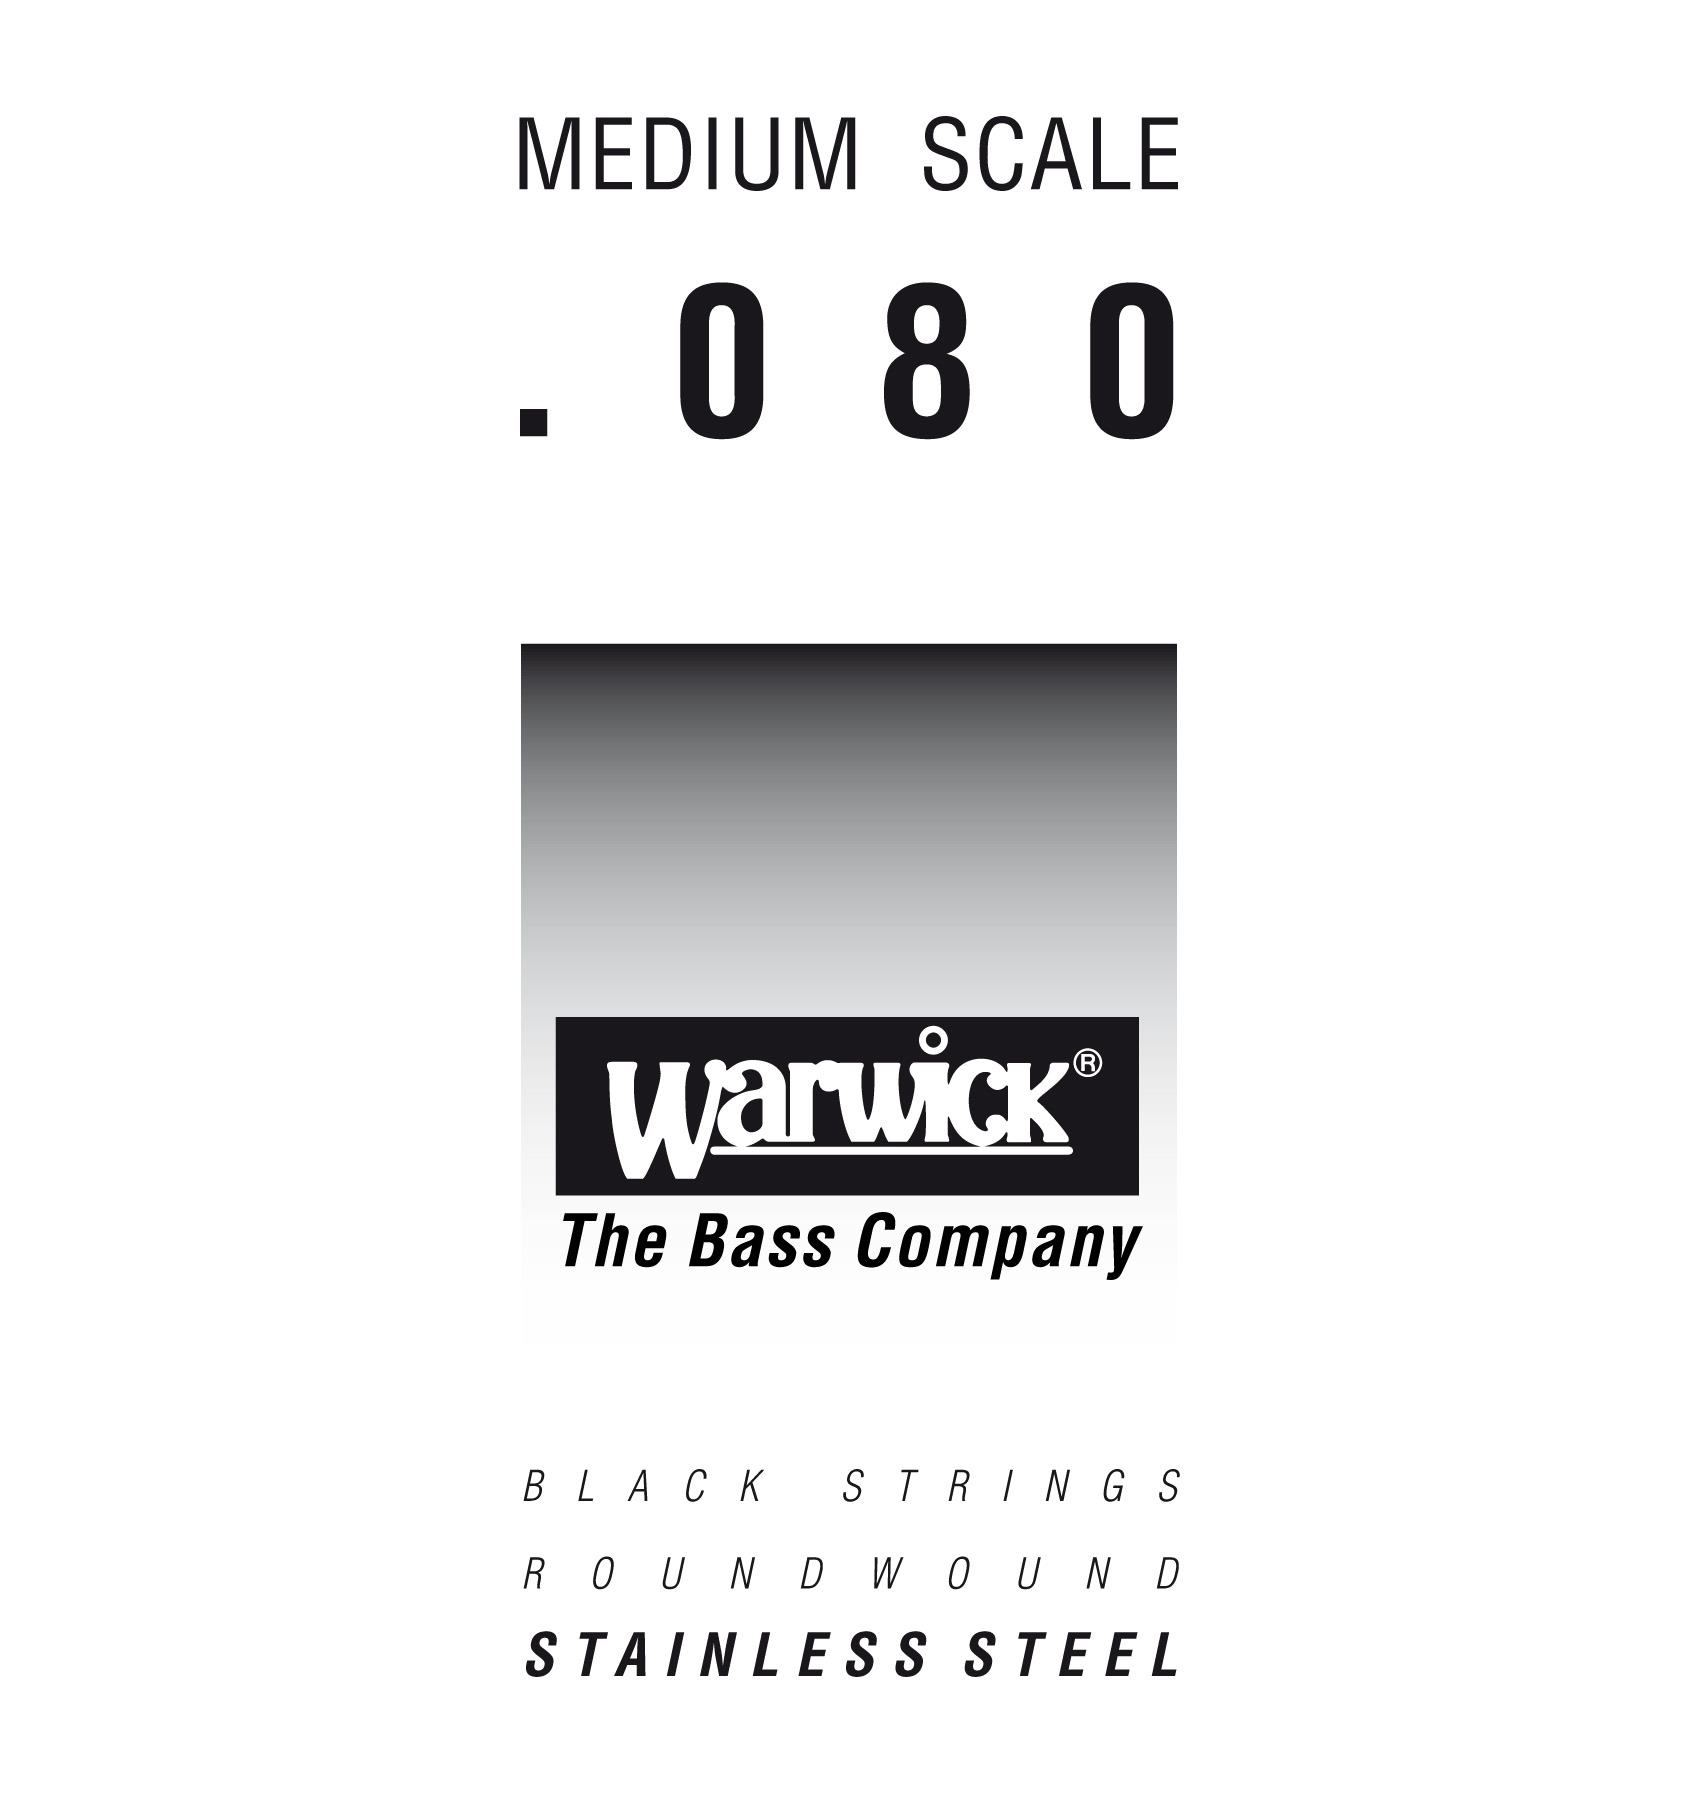 Warwick Black Label Bass Strings, Stainless Steel - Bass Single String, .080", Medium Scale